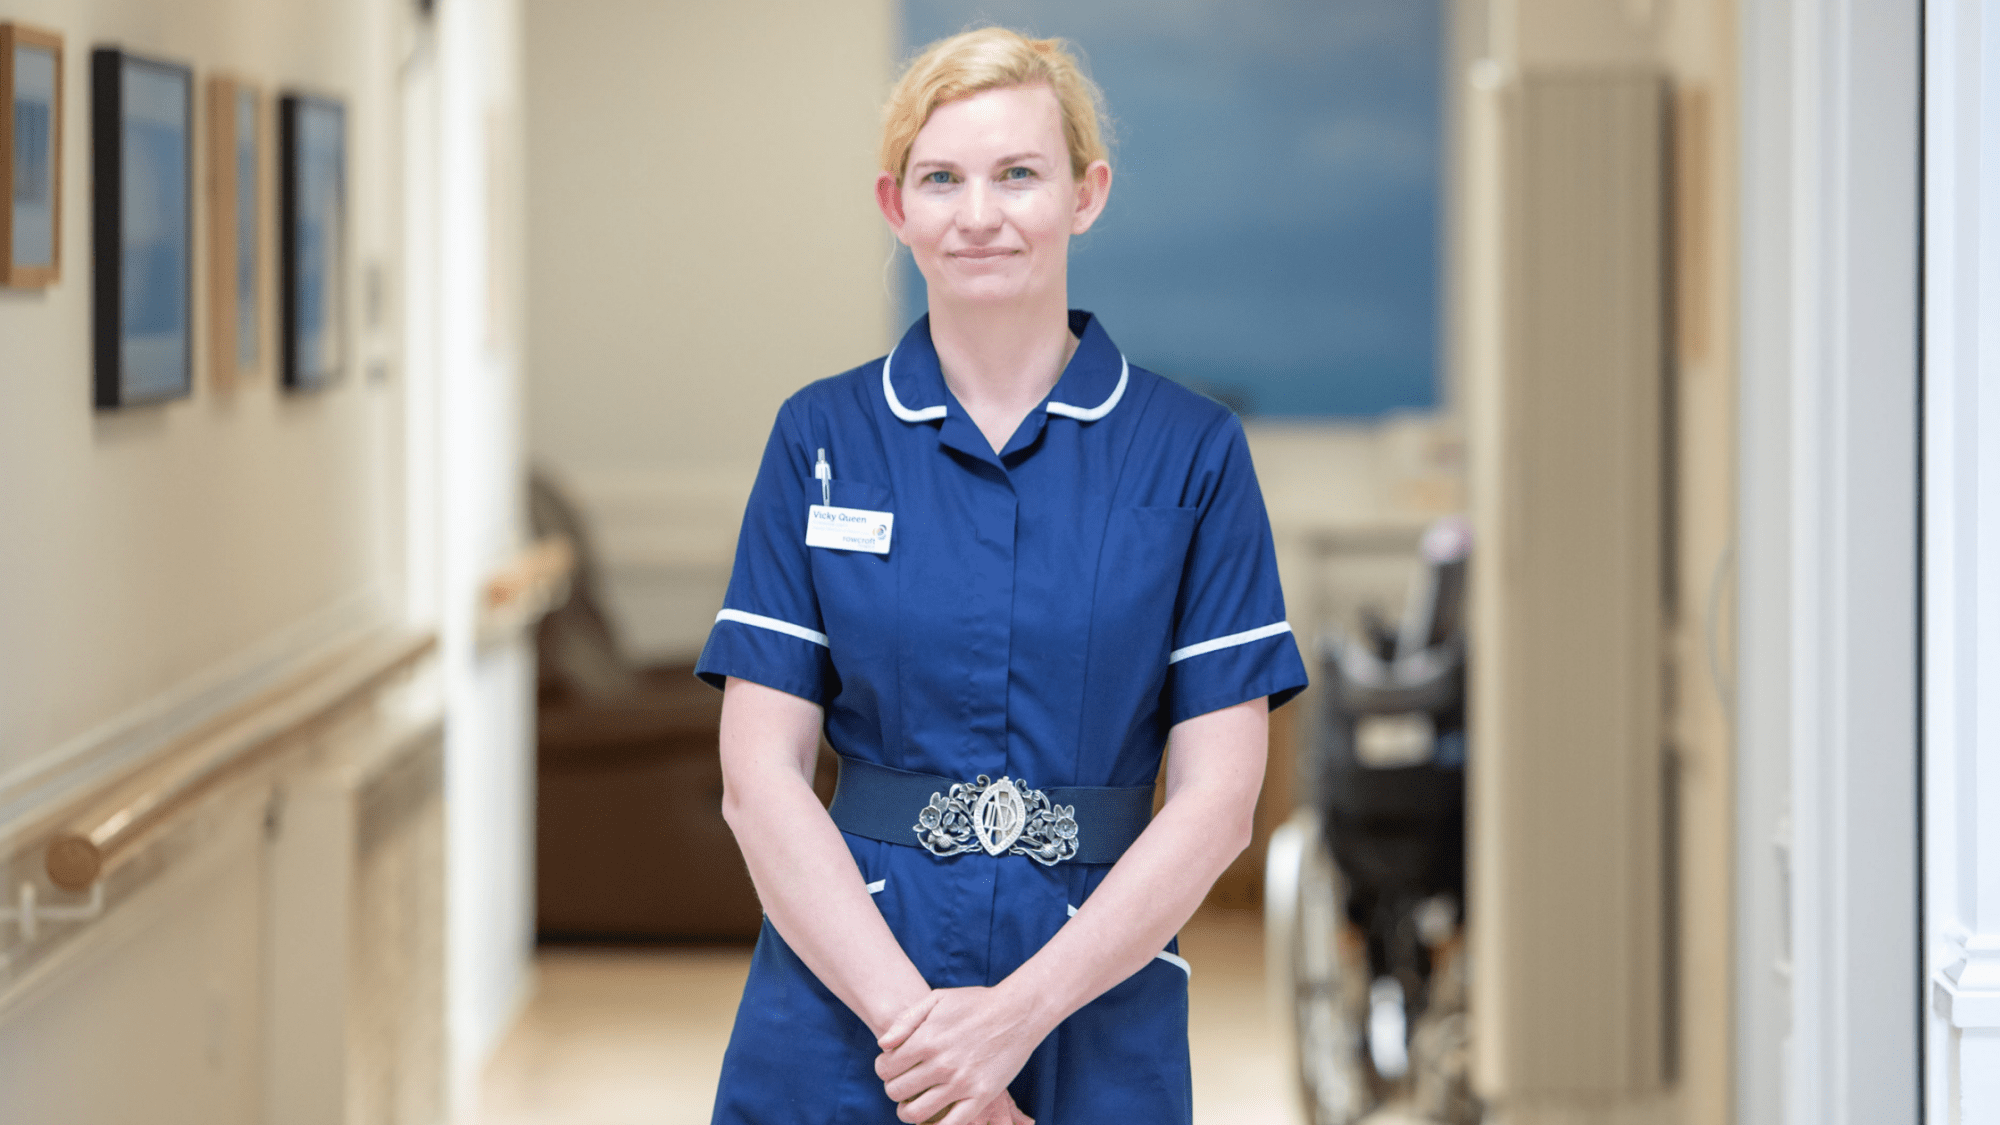 Vicky poses on the ward in nurse uniform.